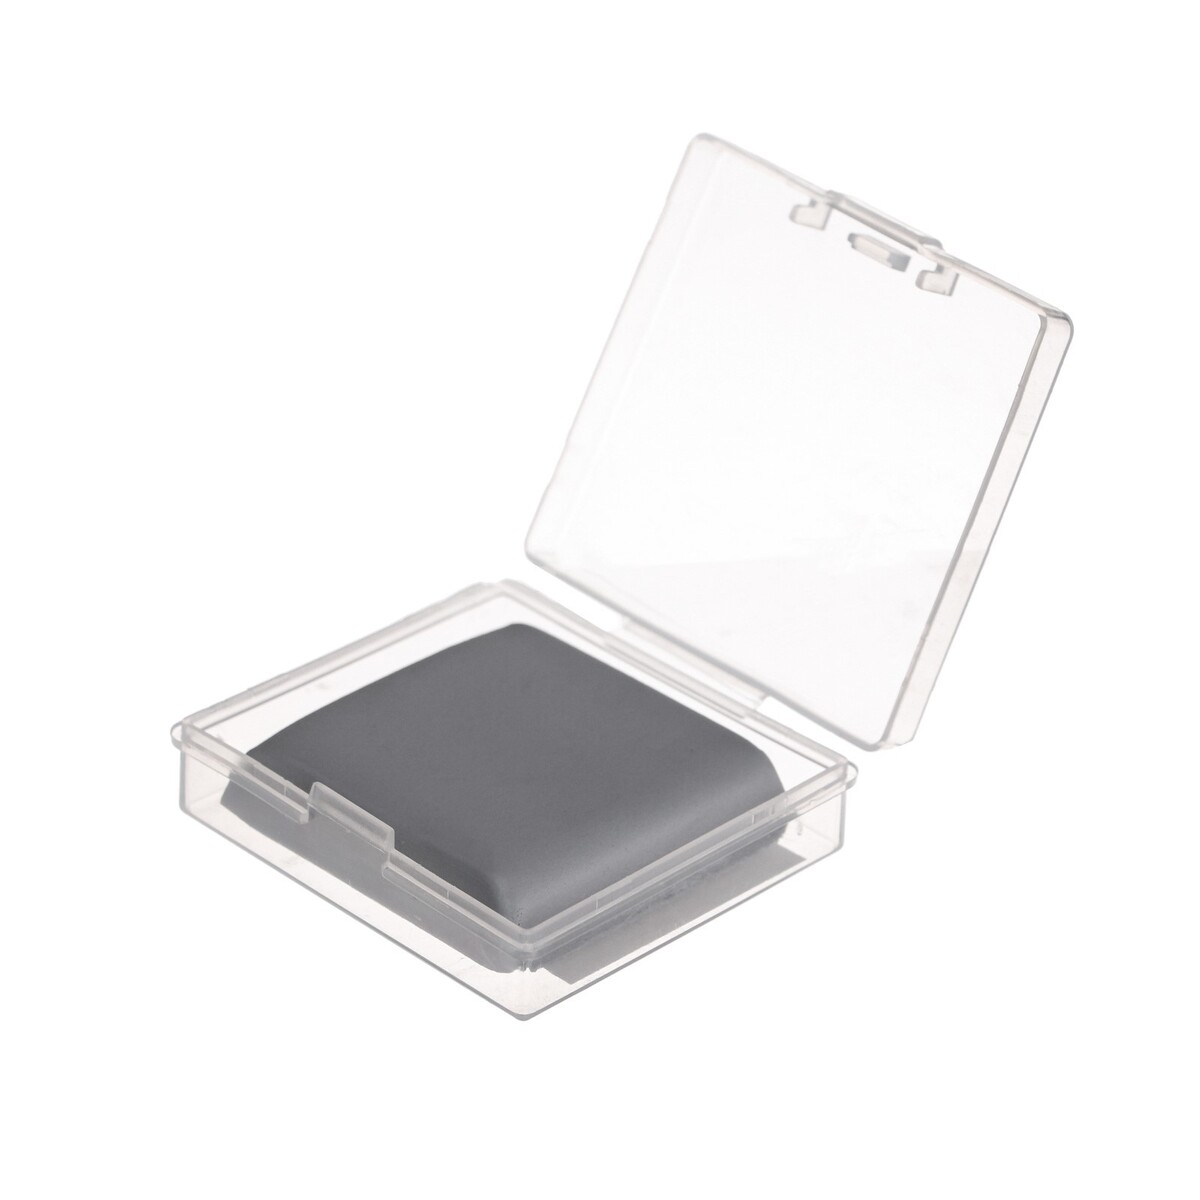 Ластик клячка прямоугольный серый, размер 37 х 35 х 0,9 мм, в коробочке ластик grip 2001 трехгранный серый